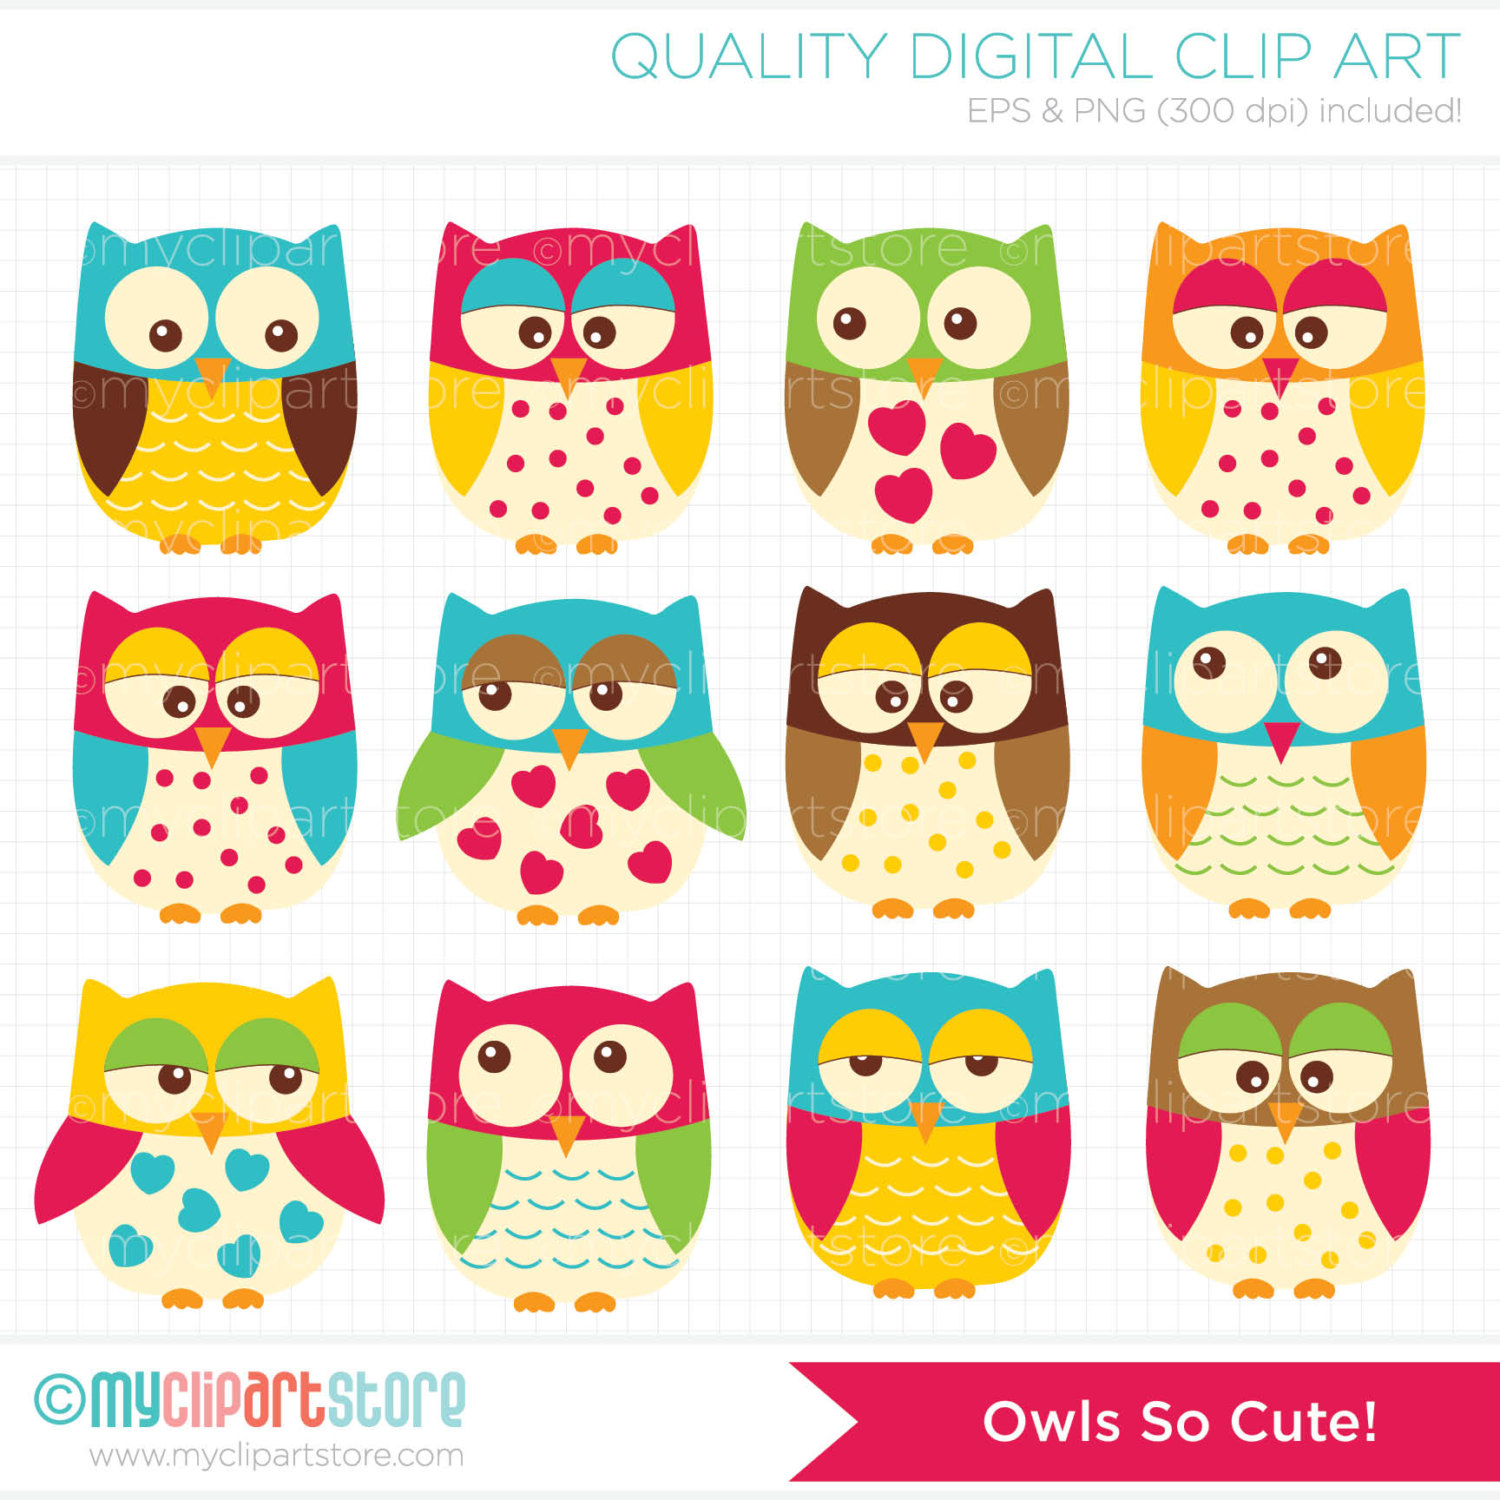 Cute owl pattern clipart 